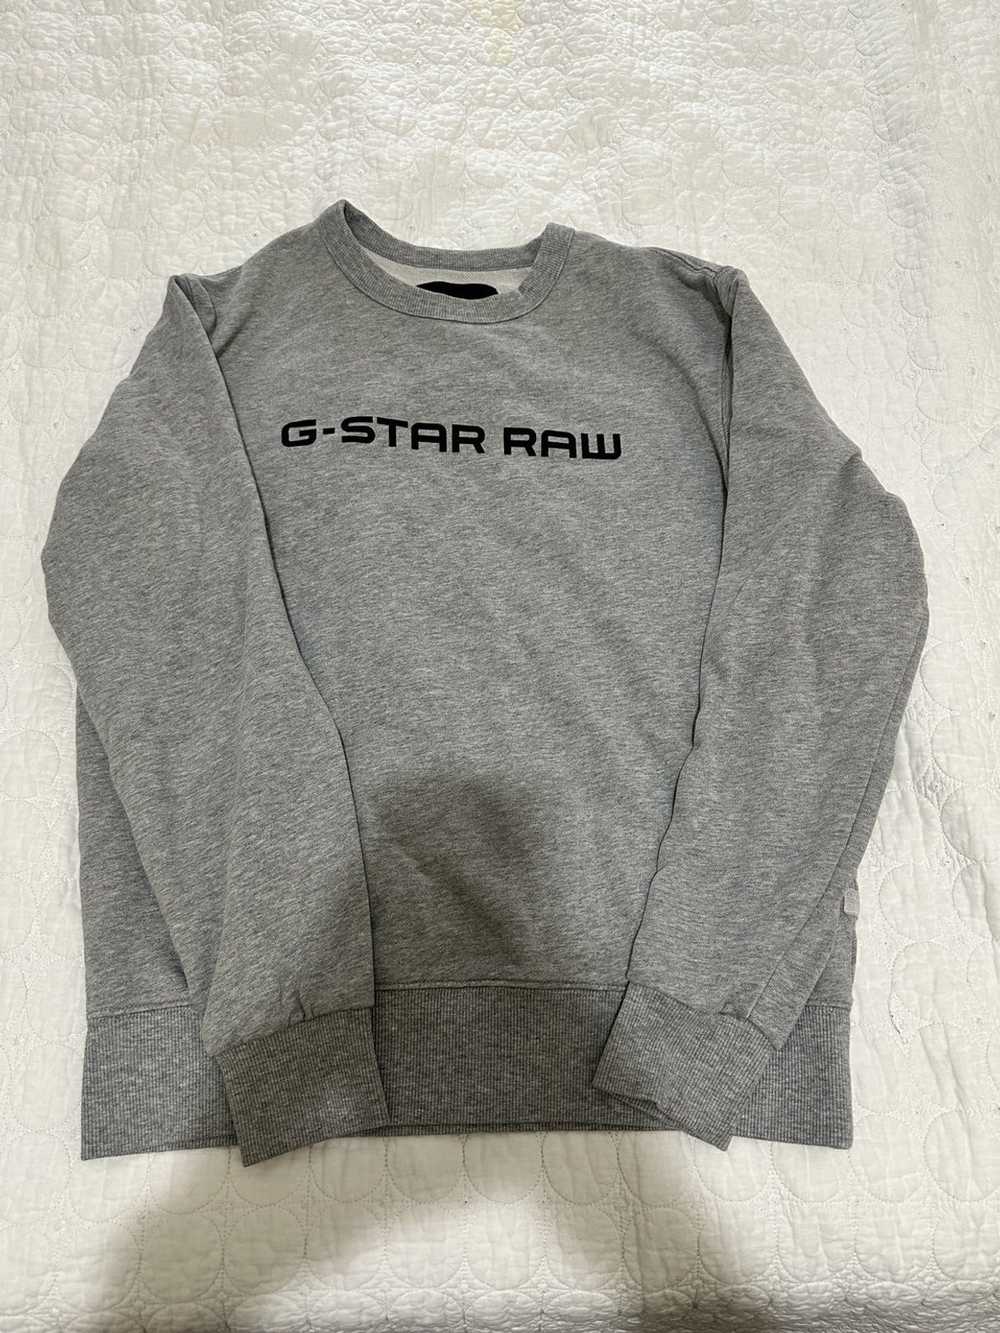 G Star Raw Loaq Sweater - image 1